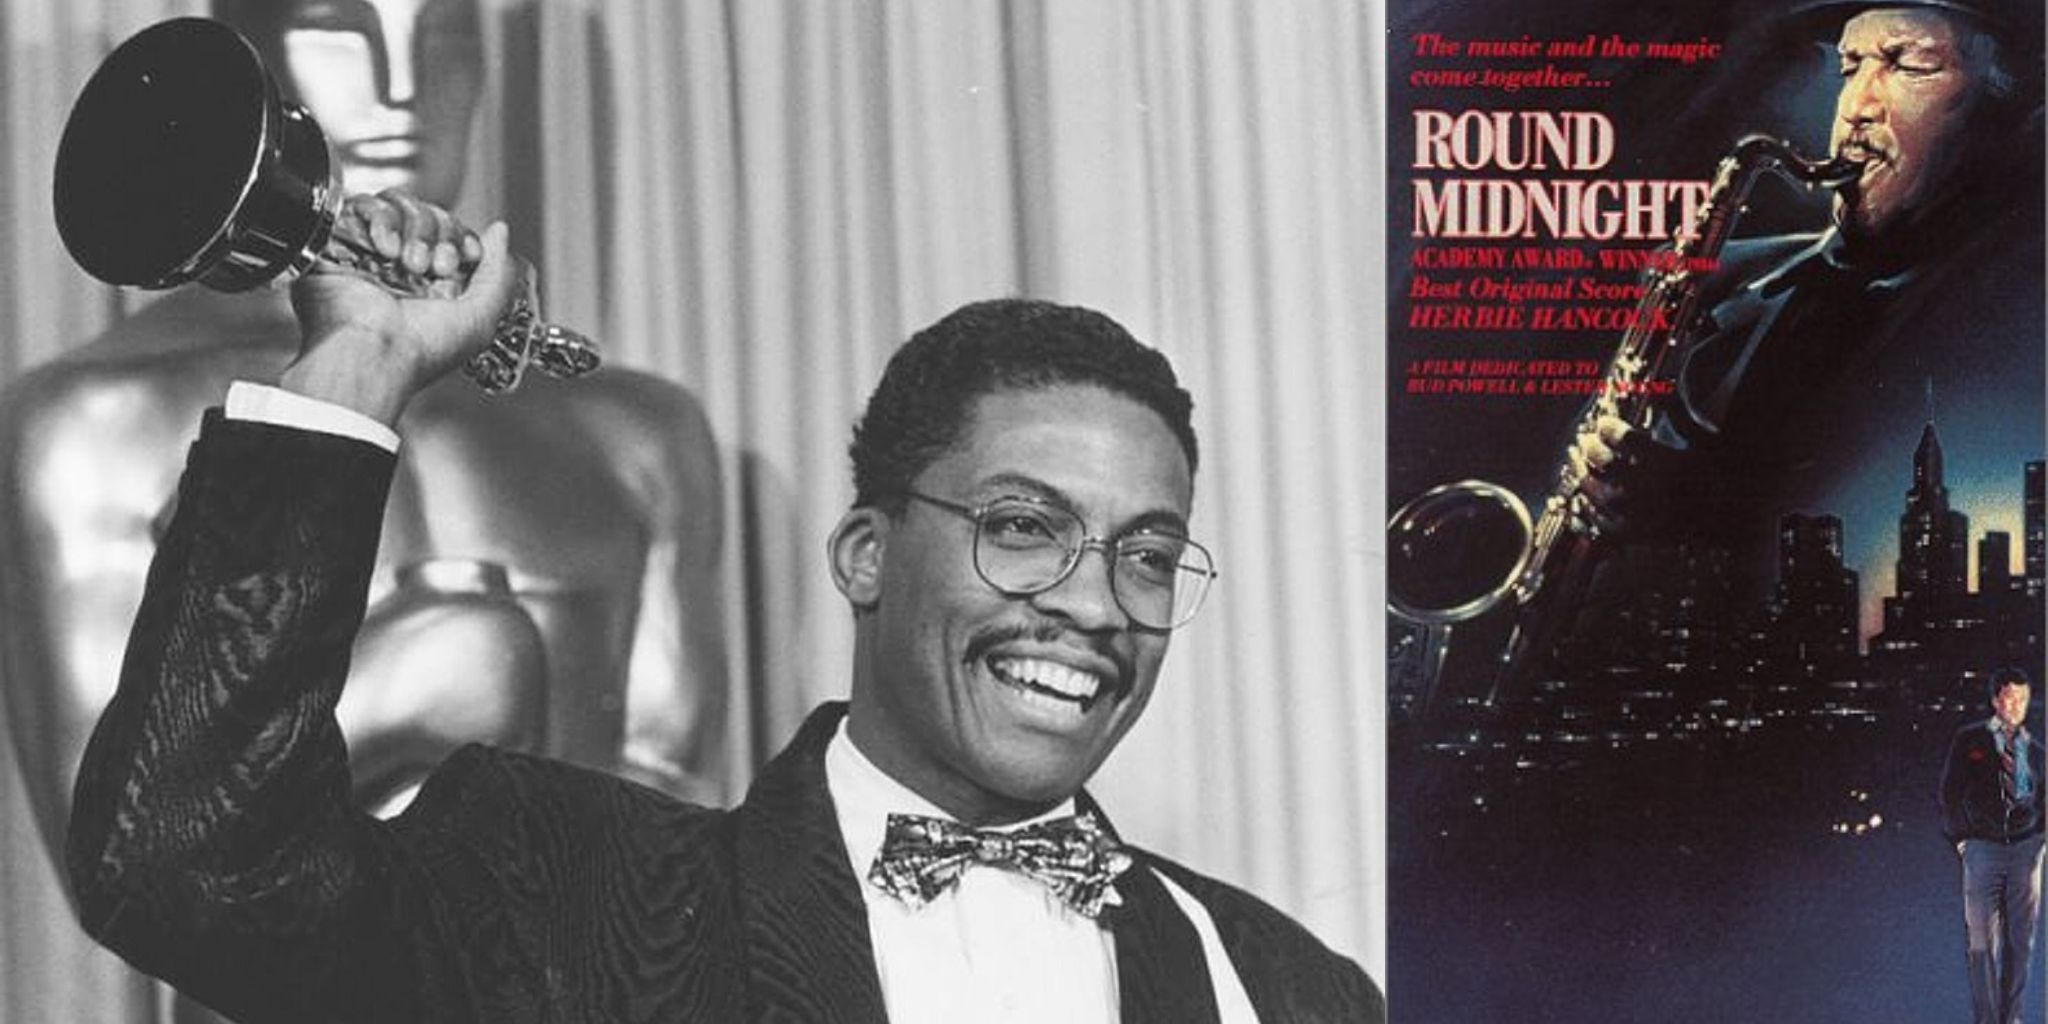 Herbie Hancock wins Oscar / Round Midnight Poster